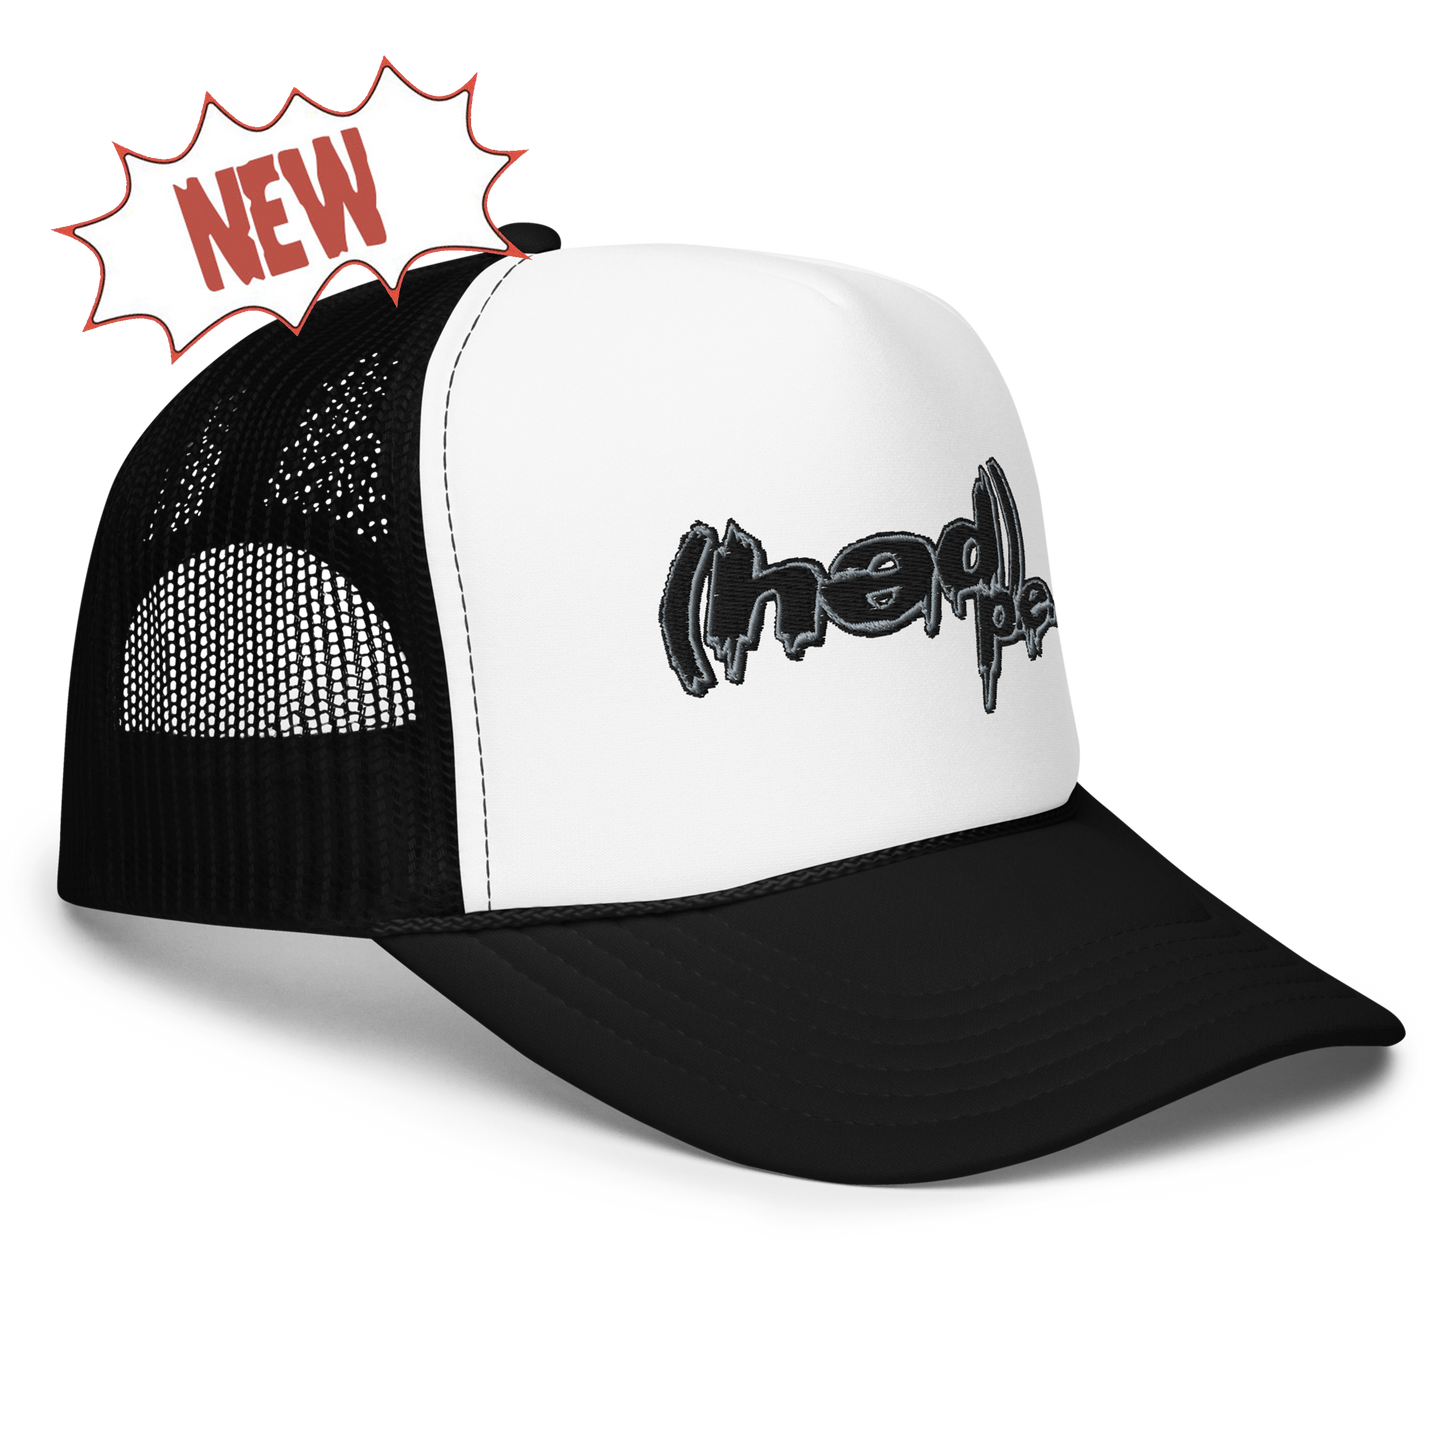 (Hed) P.E. - Detox Logo Tee Snapback Trucker Hat